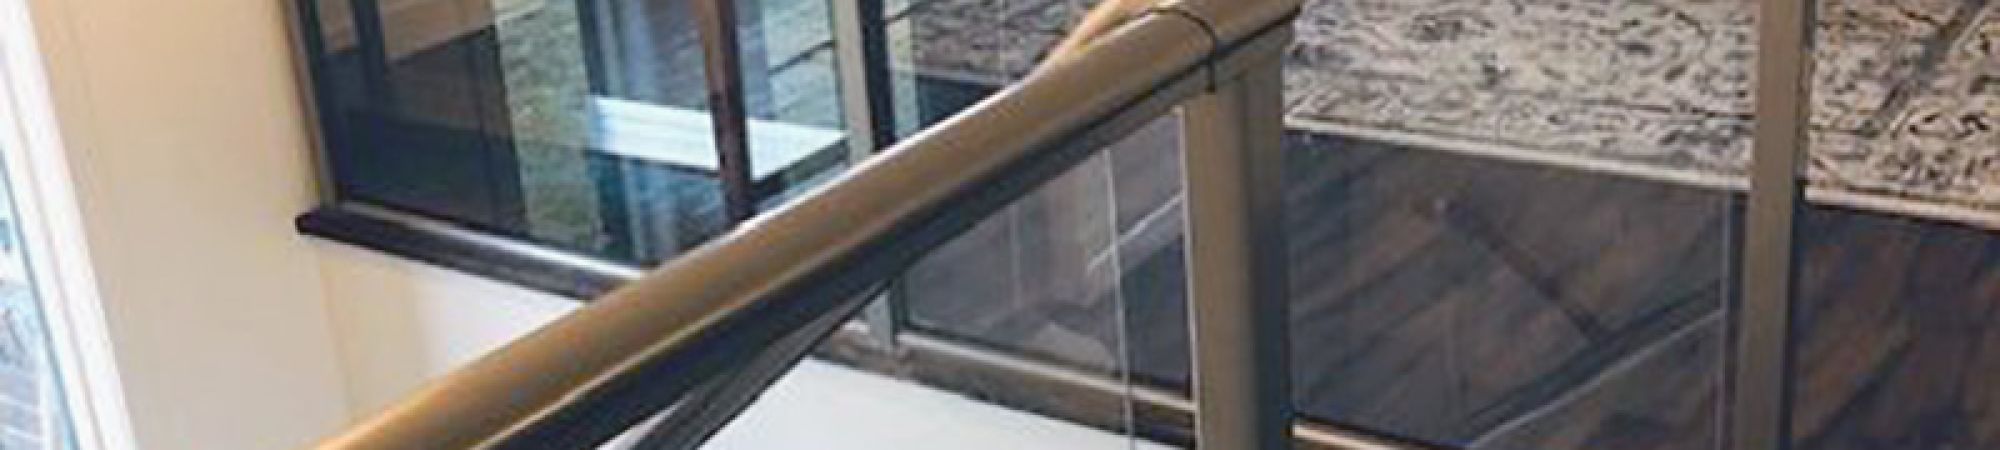 Framed glass stair railing in a living room